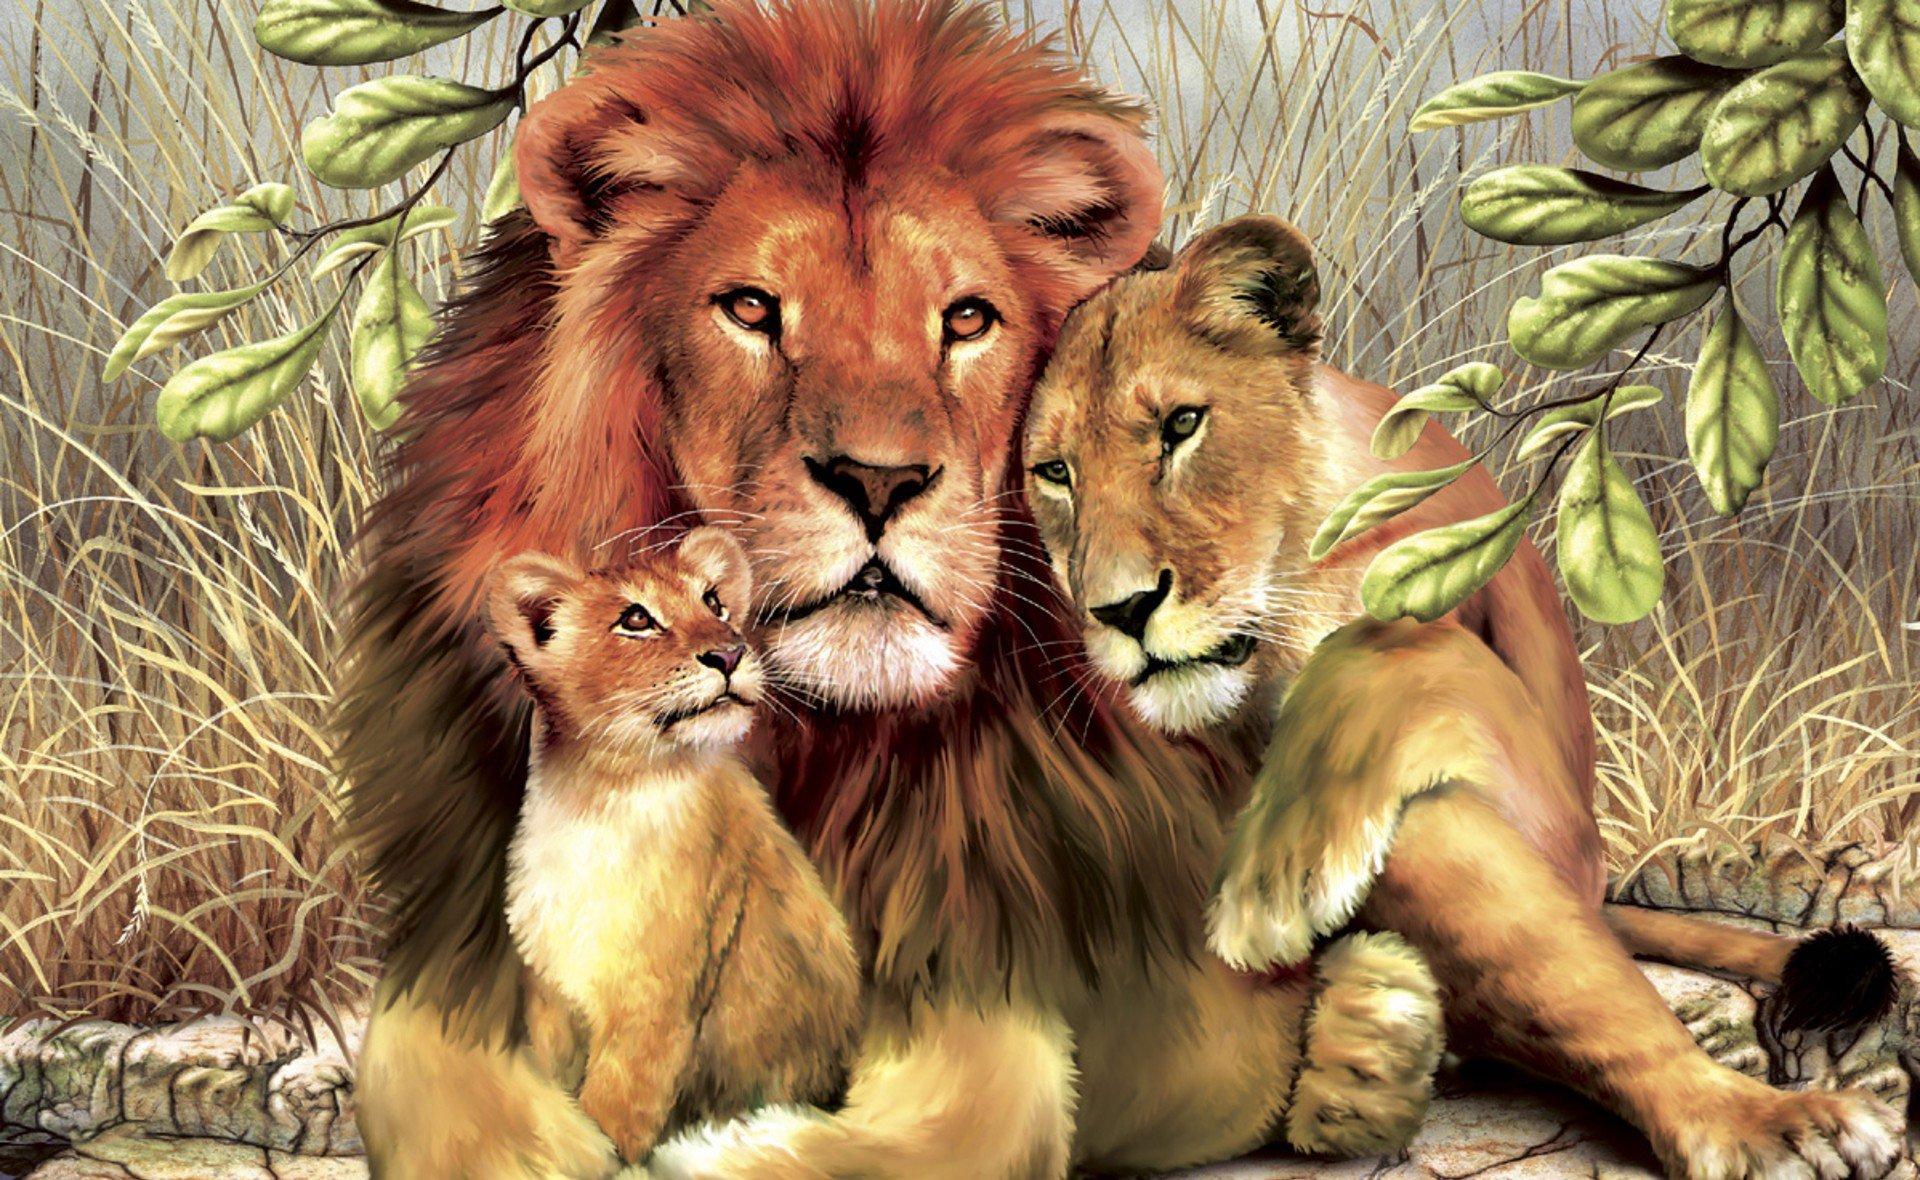 Lion Wallpaper, Background, Image, Picture. Design Trends PSD, Vector Downloads